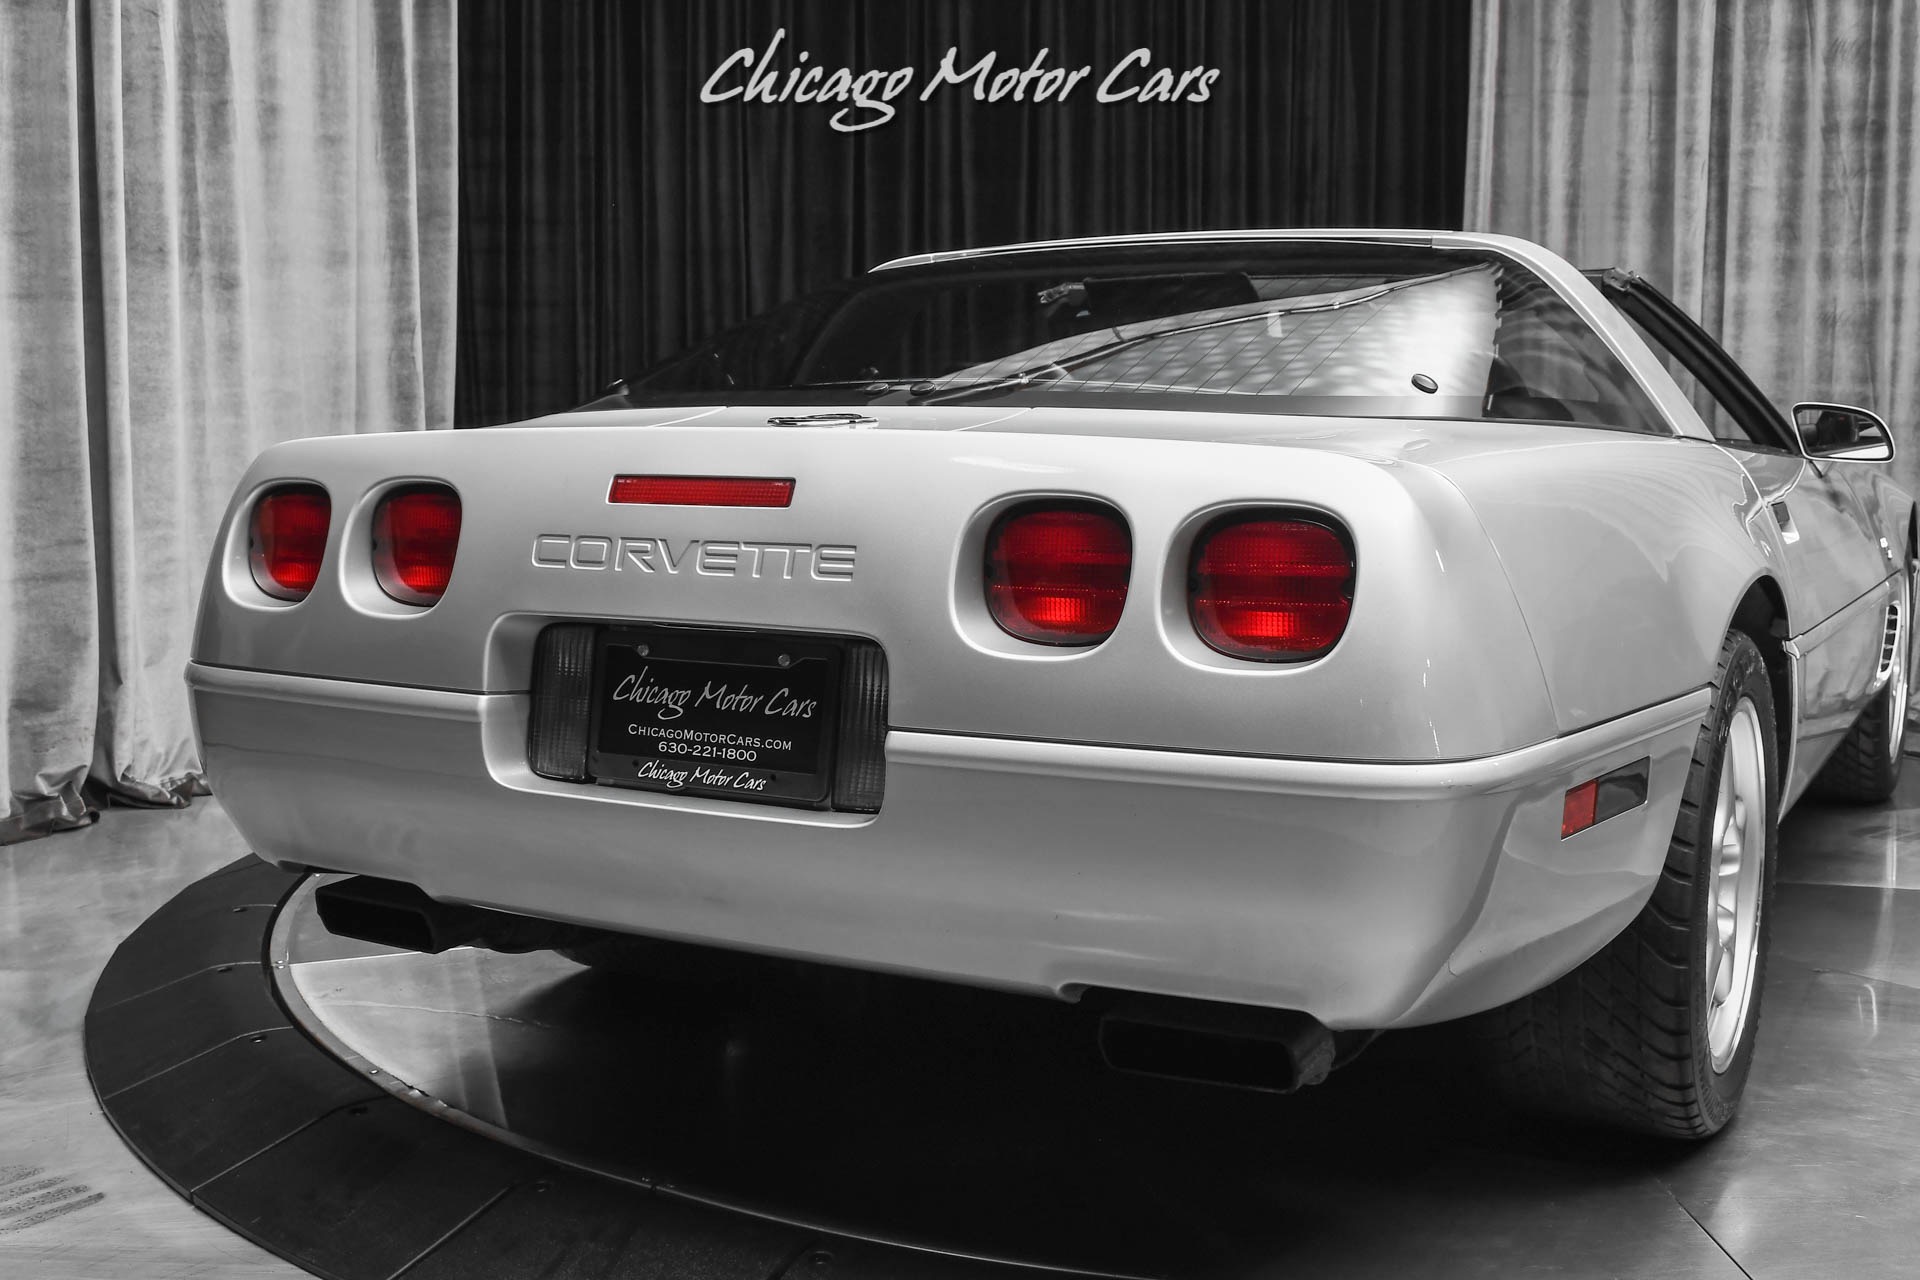 Used-1996-Chevrolet-Corvette-Collectors-Edition-Coupe-MANUAL-Super-LOW-Miles-LT4-Engine-RARE